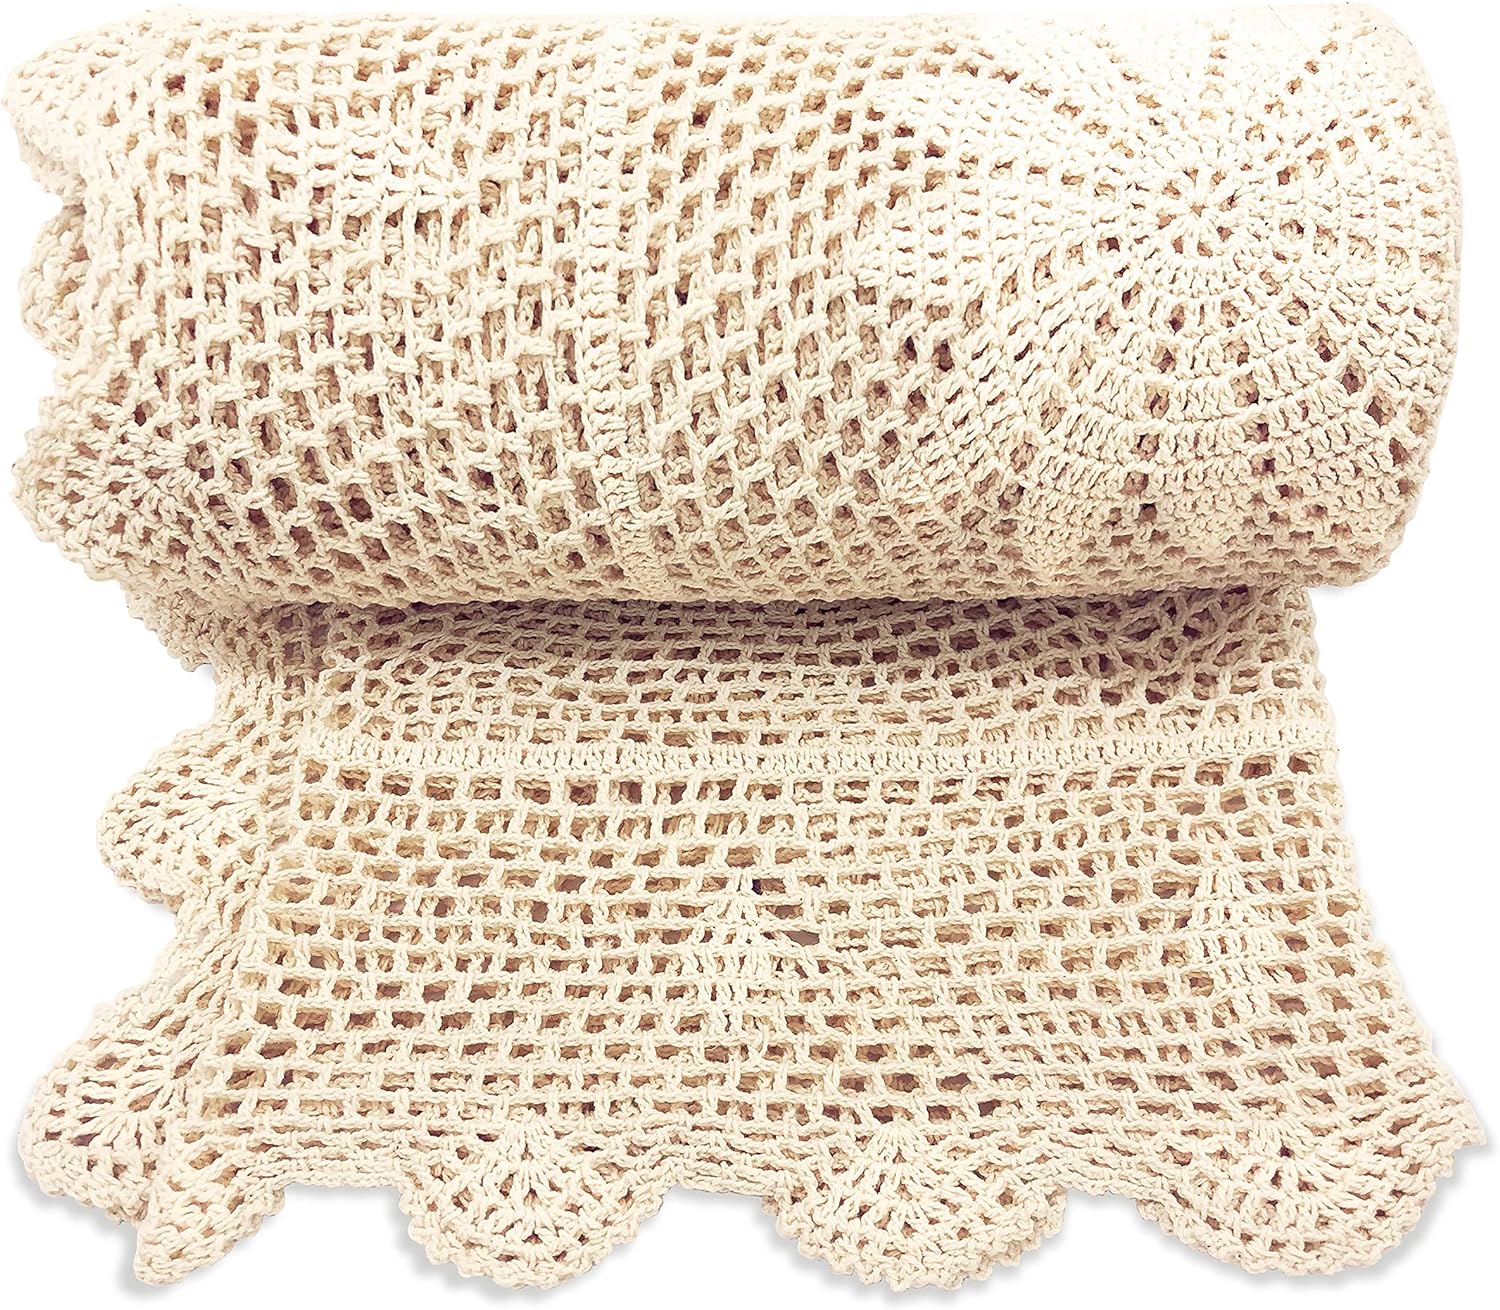 Zenviro Boho Throw Blanket, 50"x60", 100% Hand Knitted Crochet Throw Blankets,100% Cotton Knit Beige Throw, Decorative, Vintage Lace Blanket, Boho Decor, Photo Prop, Lightweight